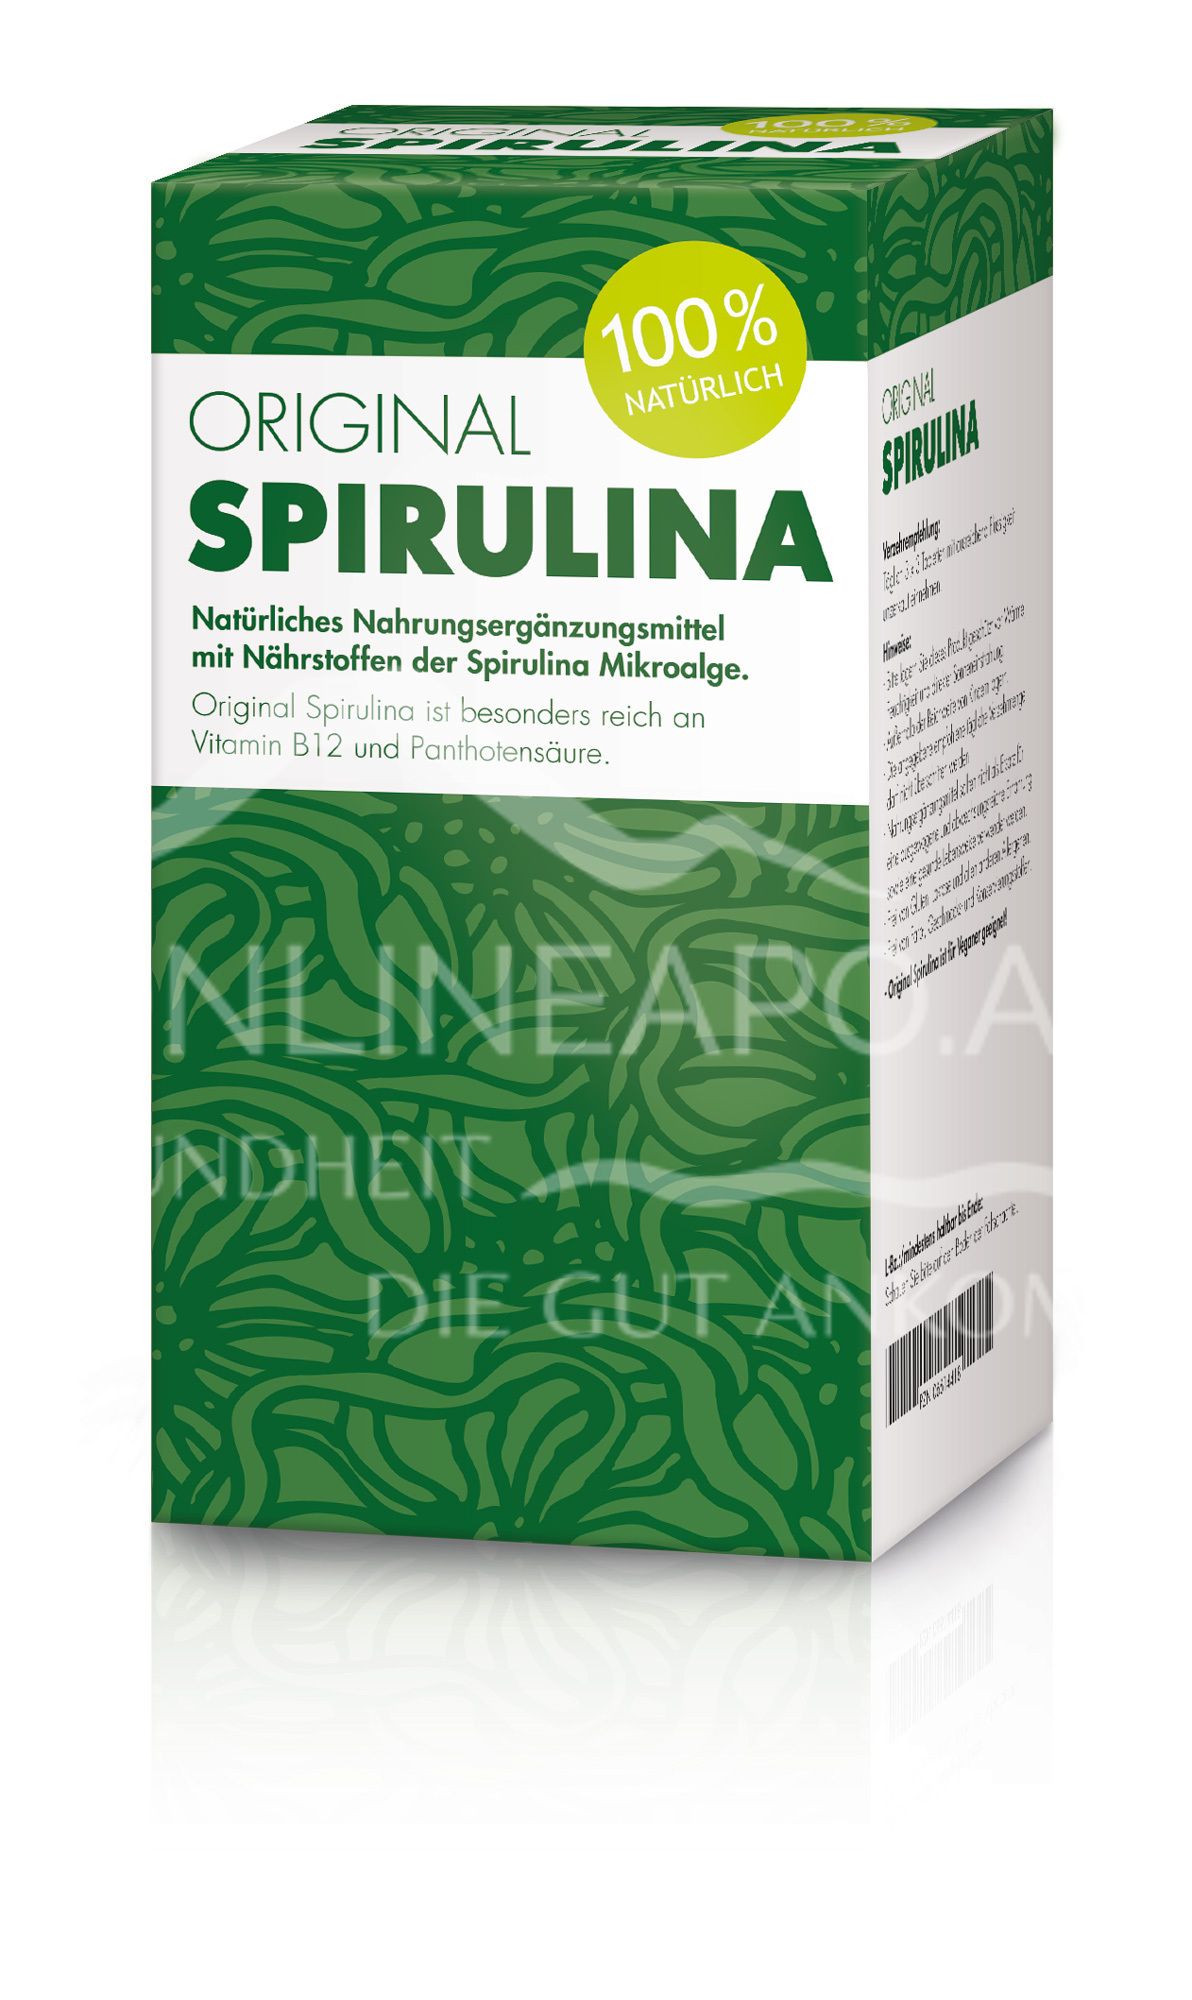 Original Spirulina